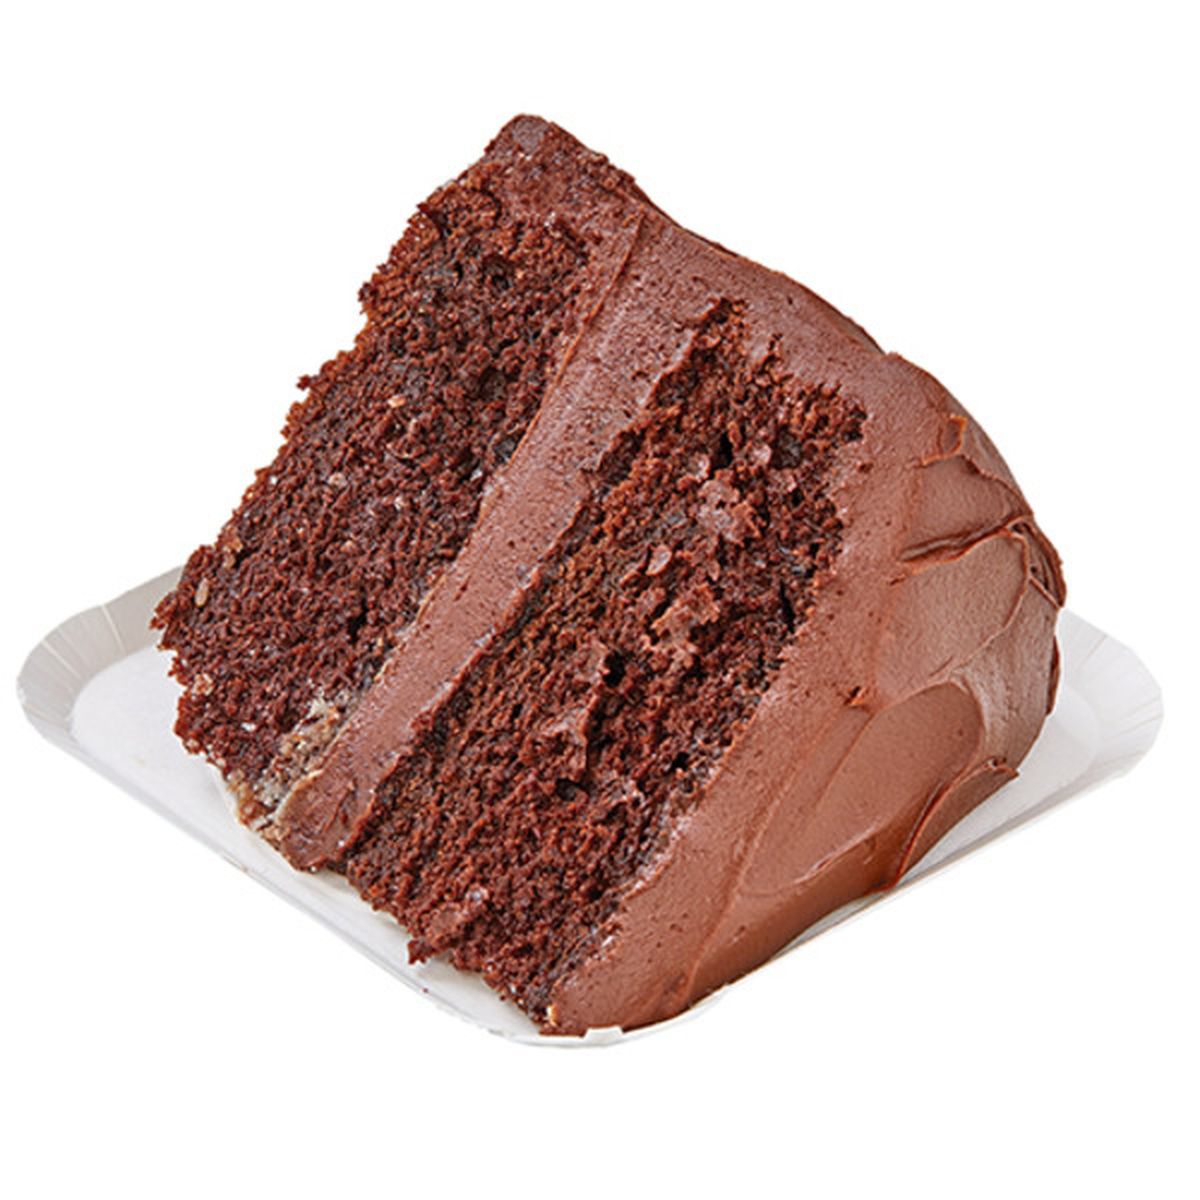 Calories in Wegmans Ultimate Chocolate Cake Slice